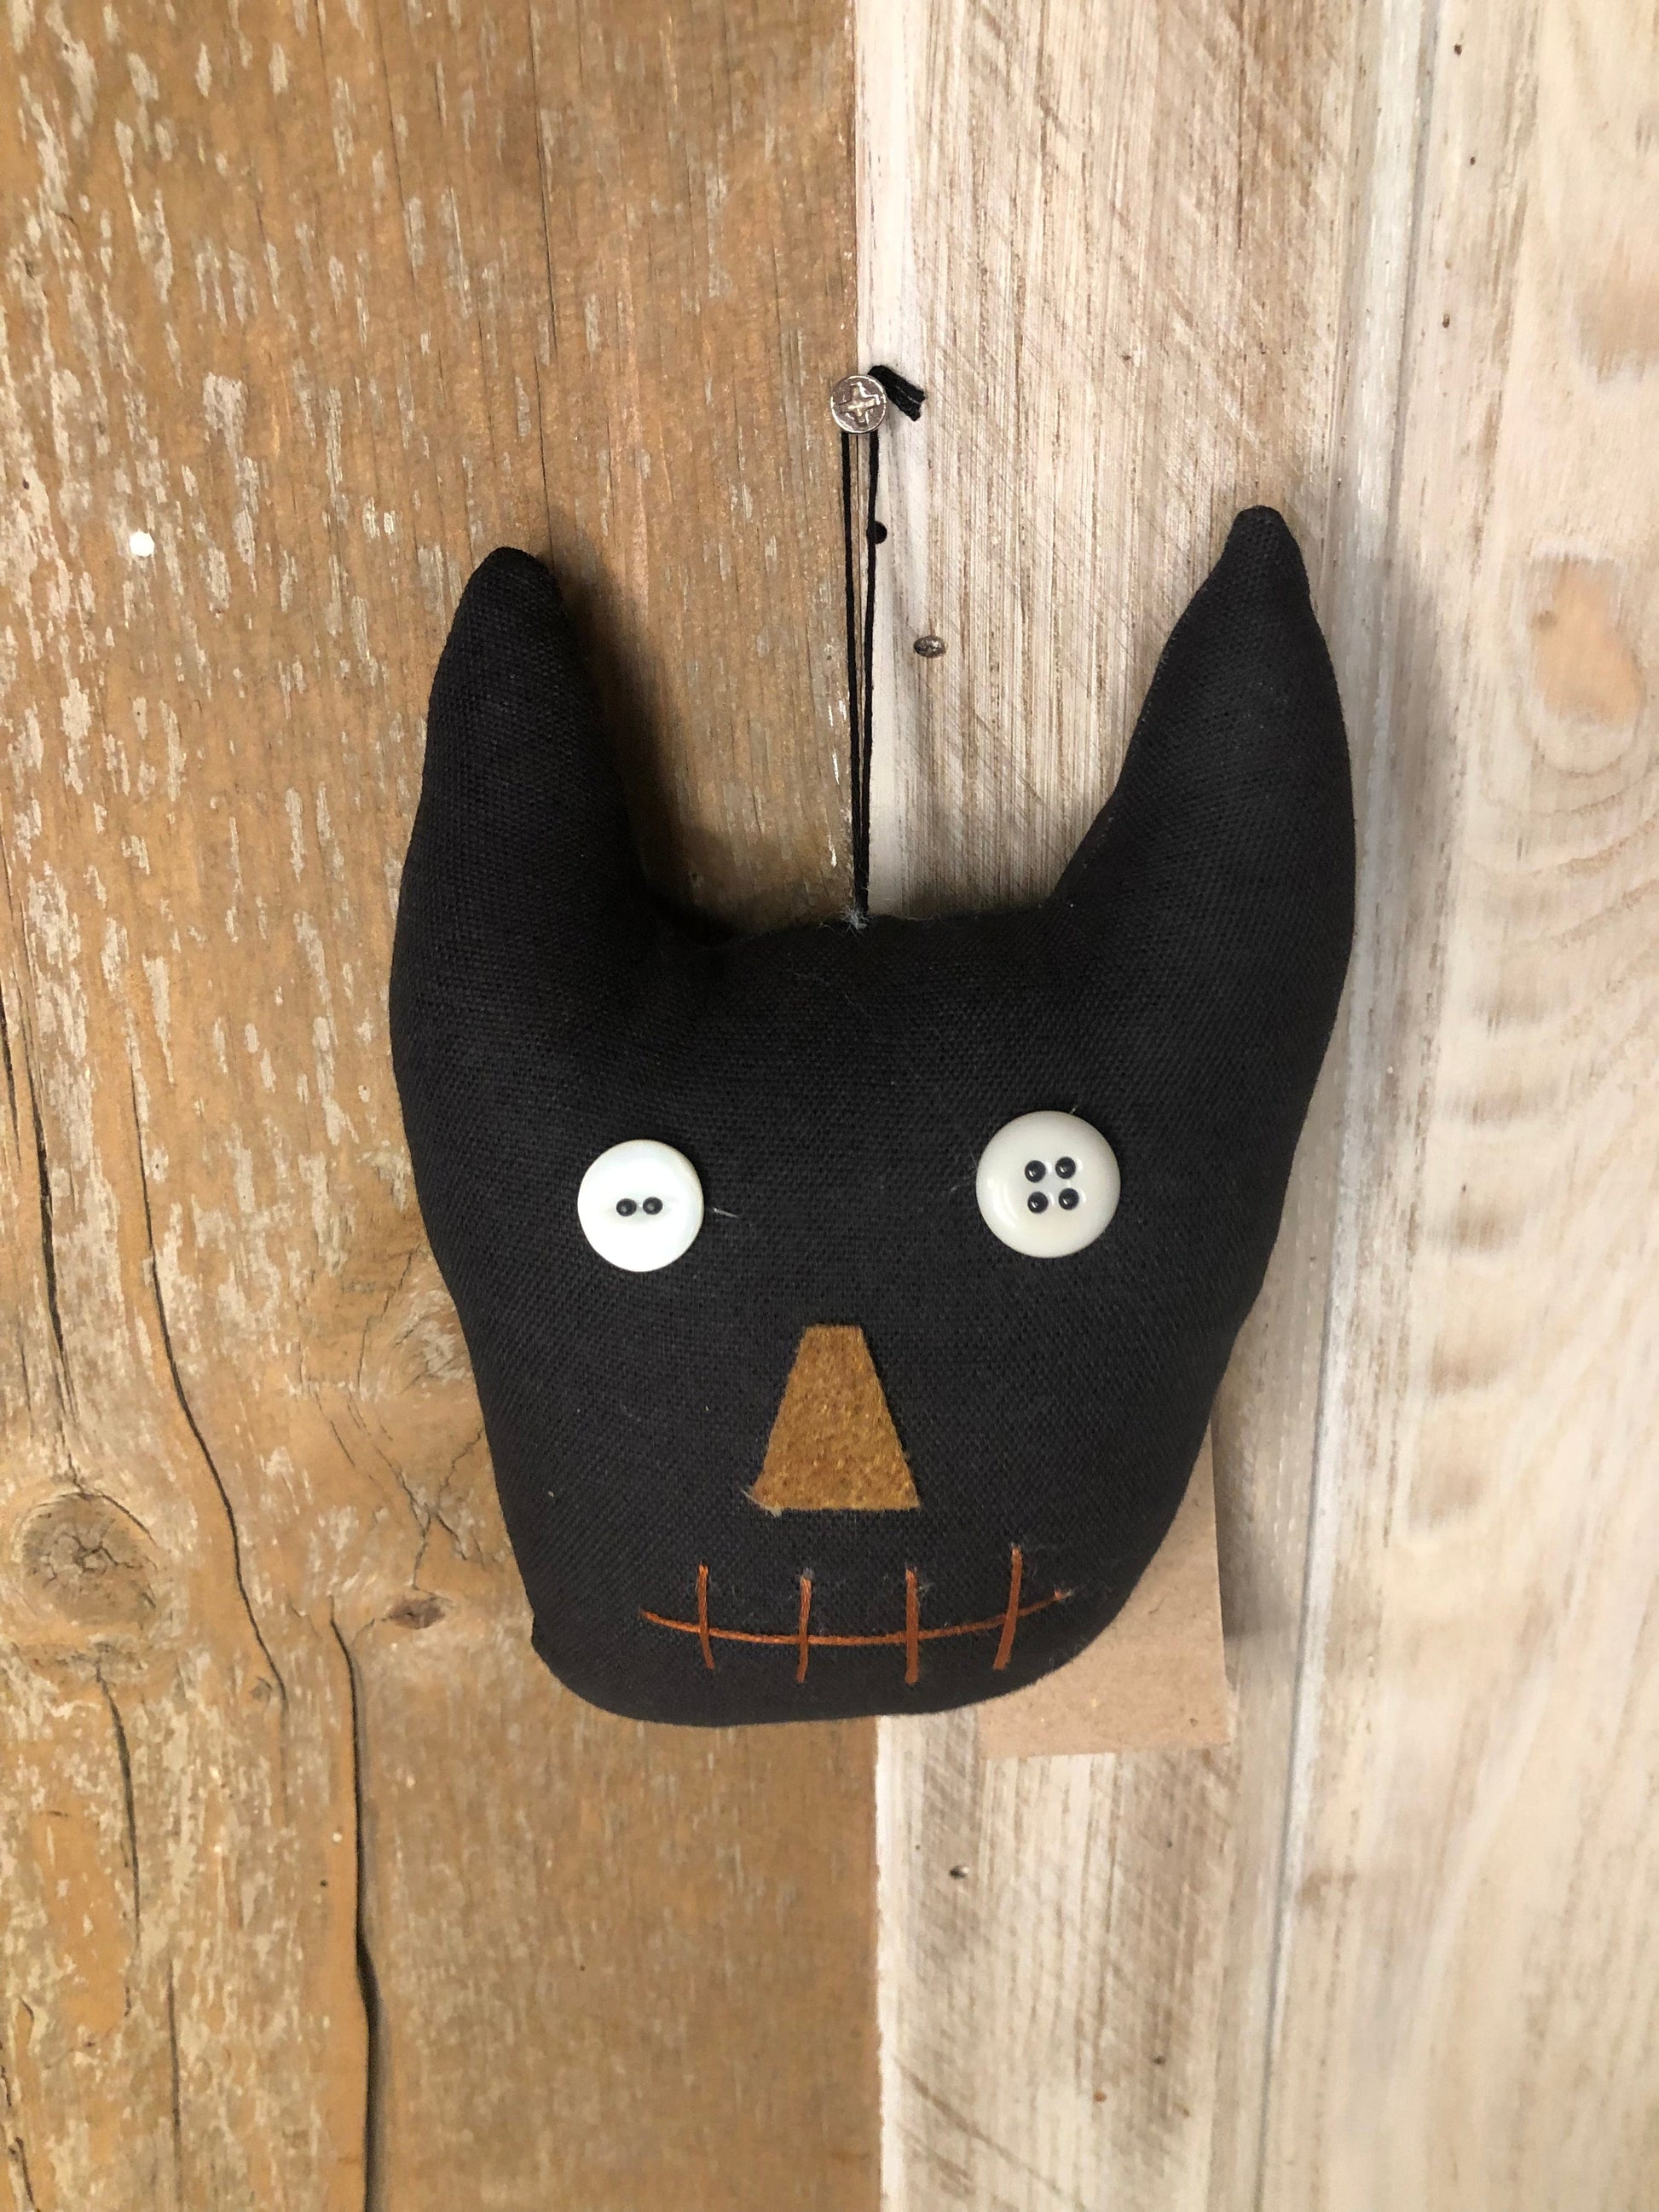 Decor Black Stuffed Cat- Hand sewn Halloween or Year Round Decor Sassafras Originals